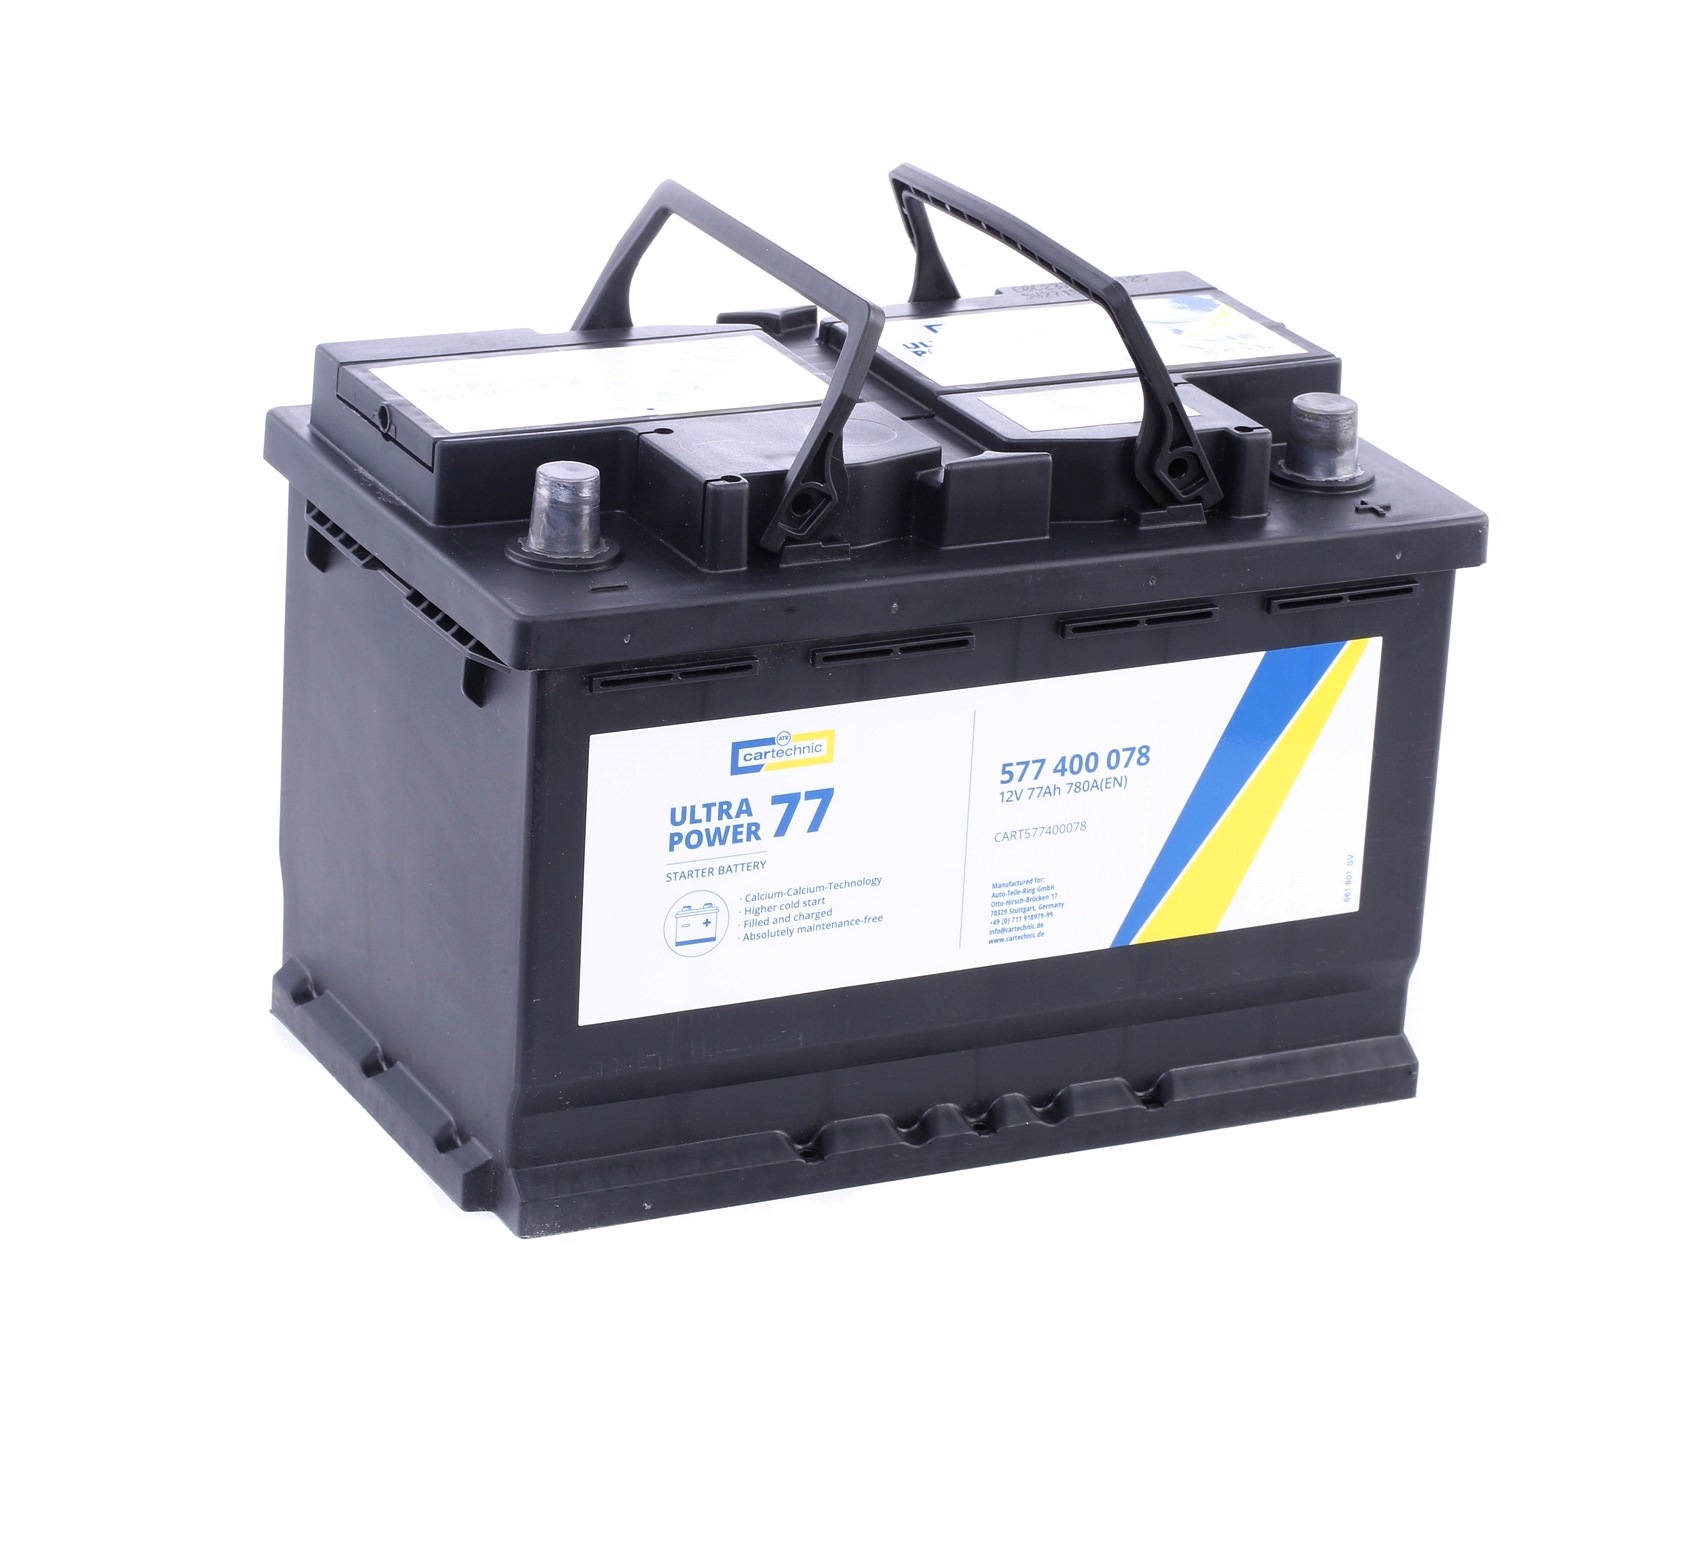 Original CARTECHNIC Autobatterie 40 27289 03561 1 für AUDI TT